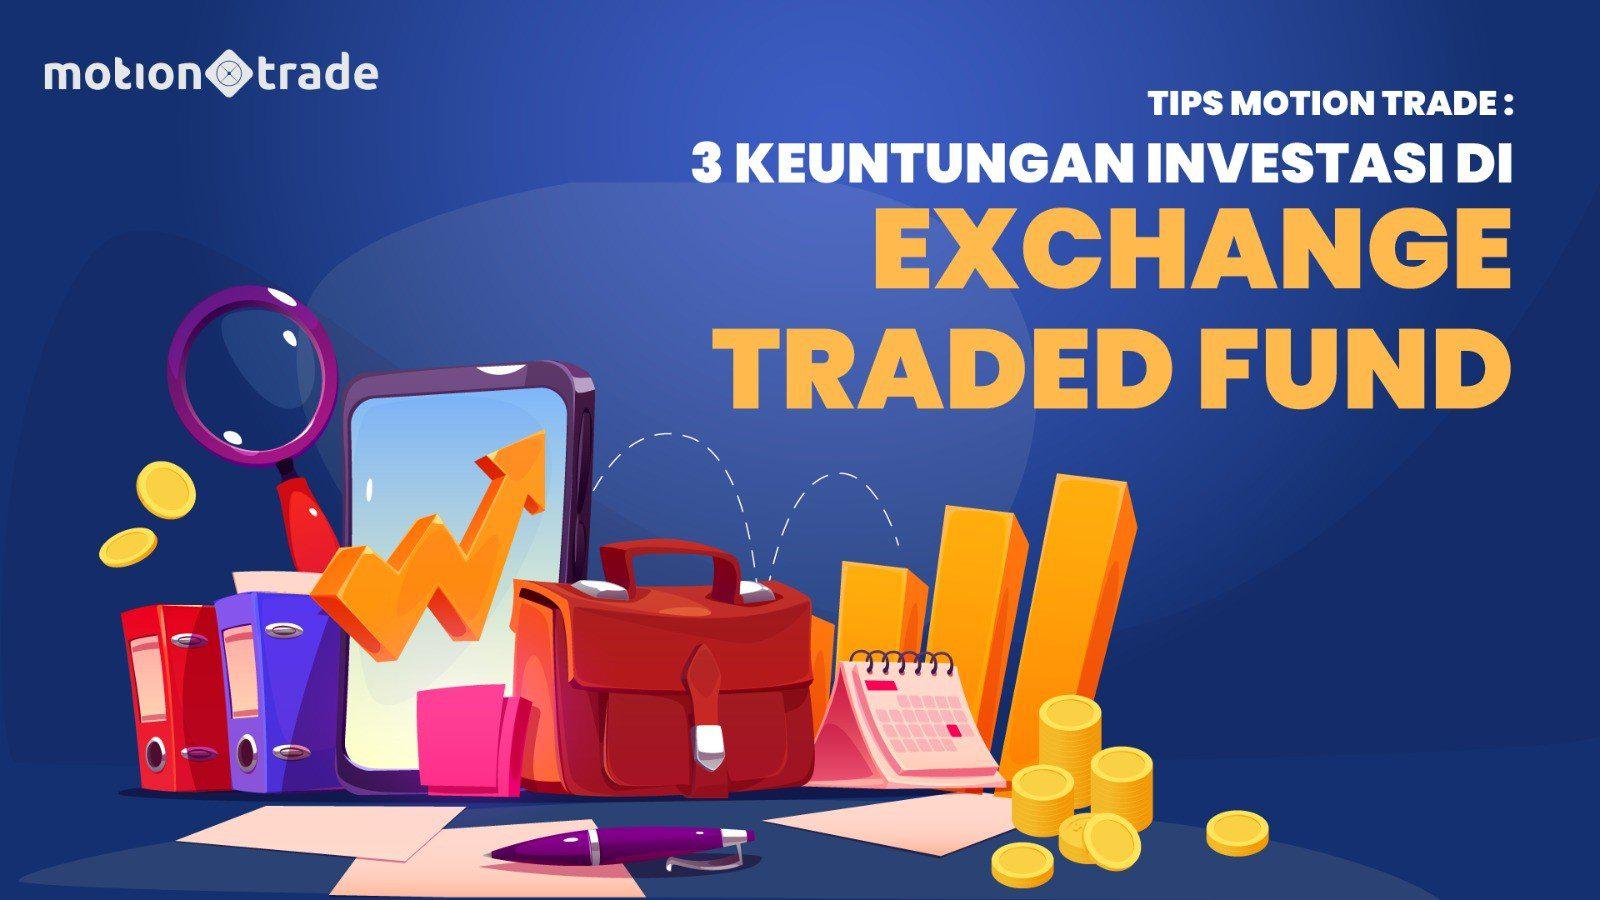 MotionTrade Bagikan Tips Raih Keuntungan Investasi di Exchange Traded Fund